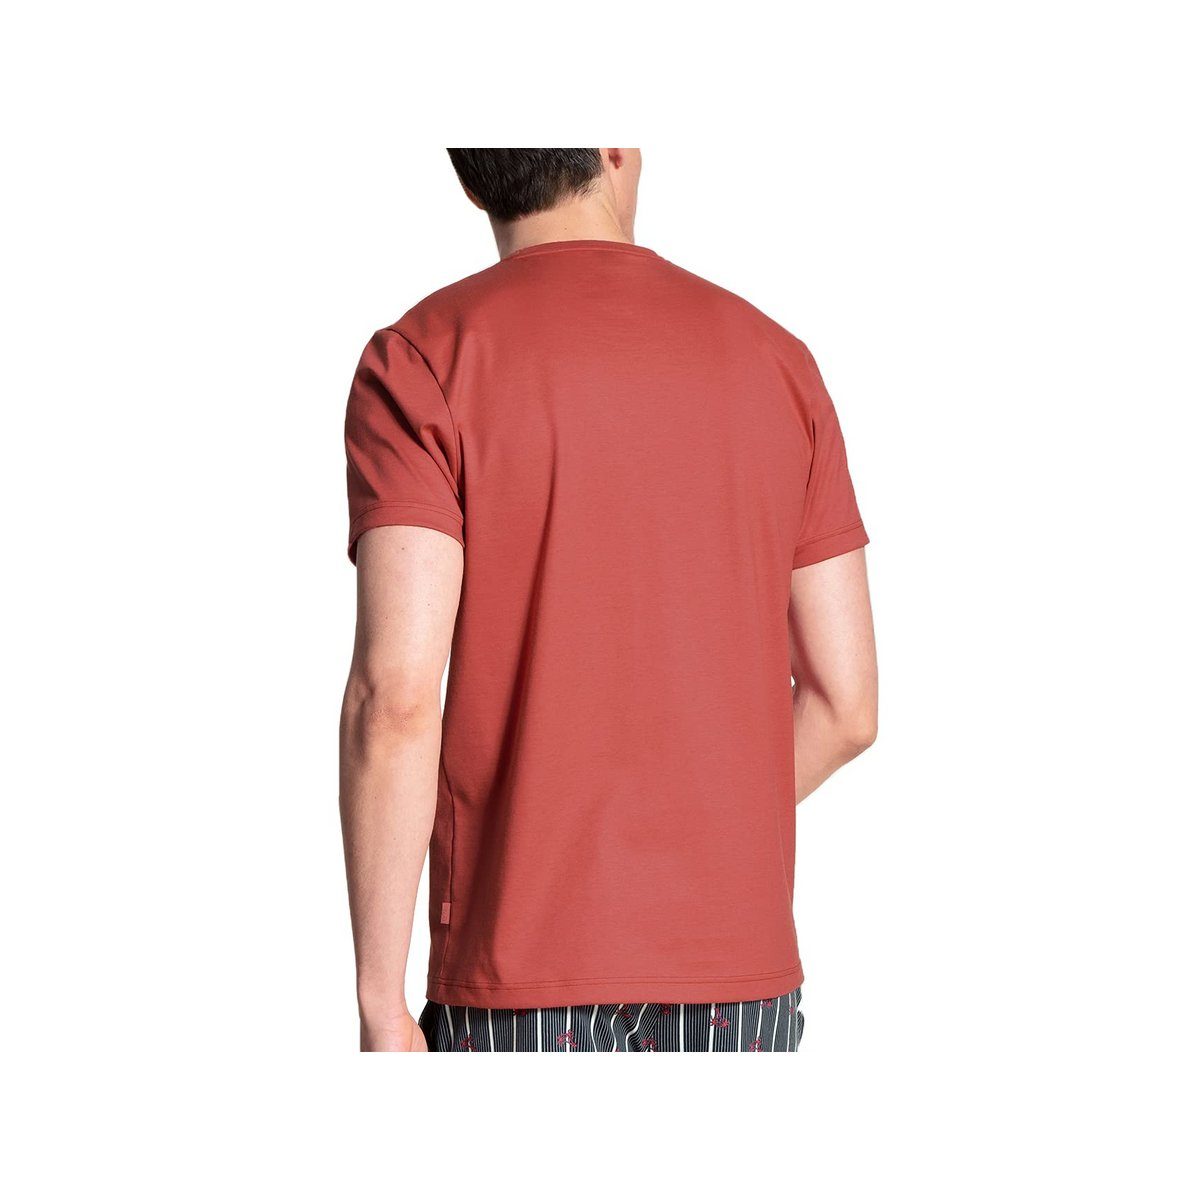 CALIDA Unterhemd rost 1-St., berry Angabe) keine red (keine Angabe